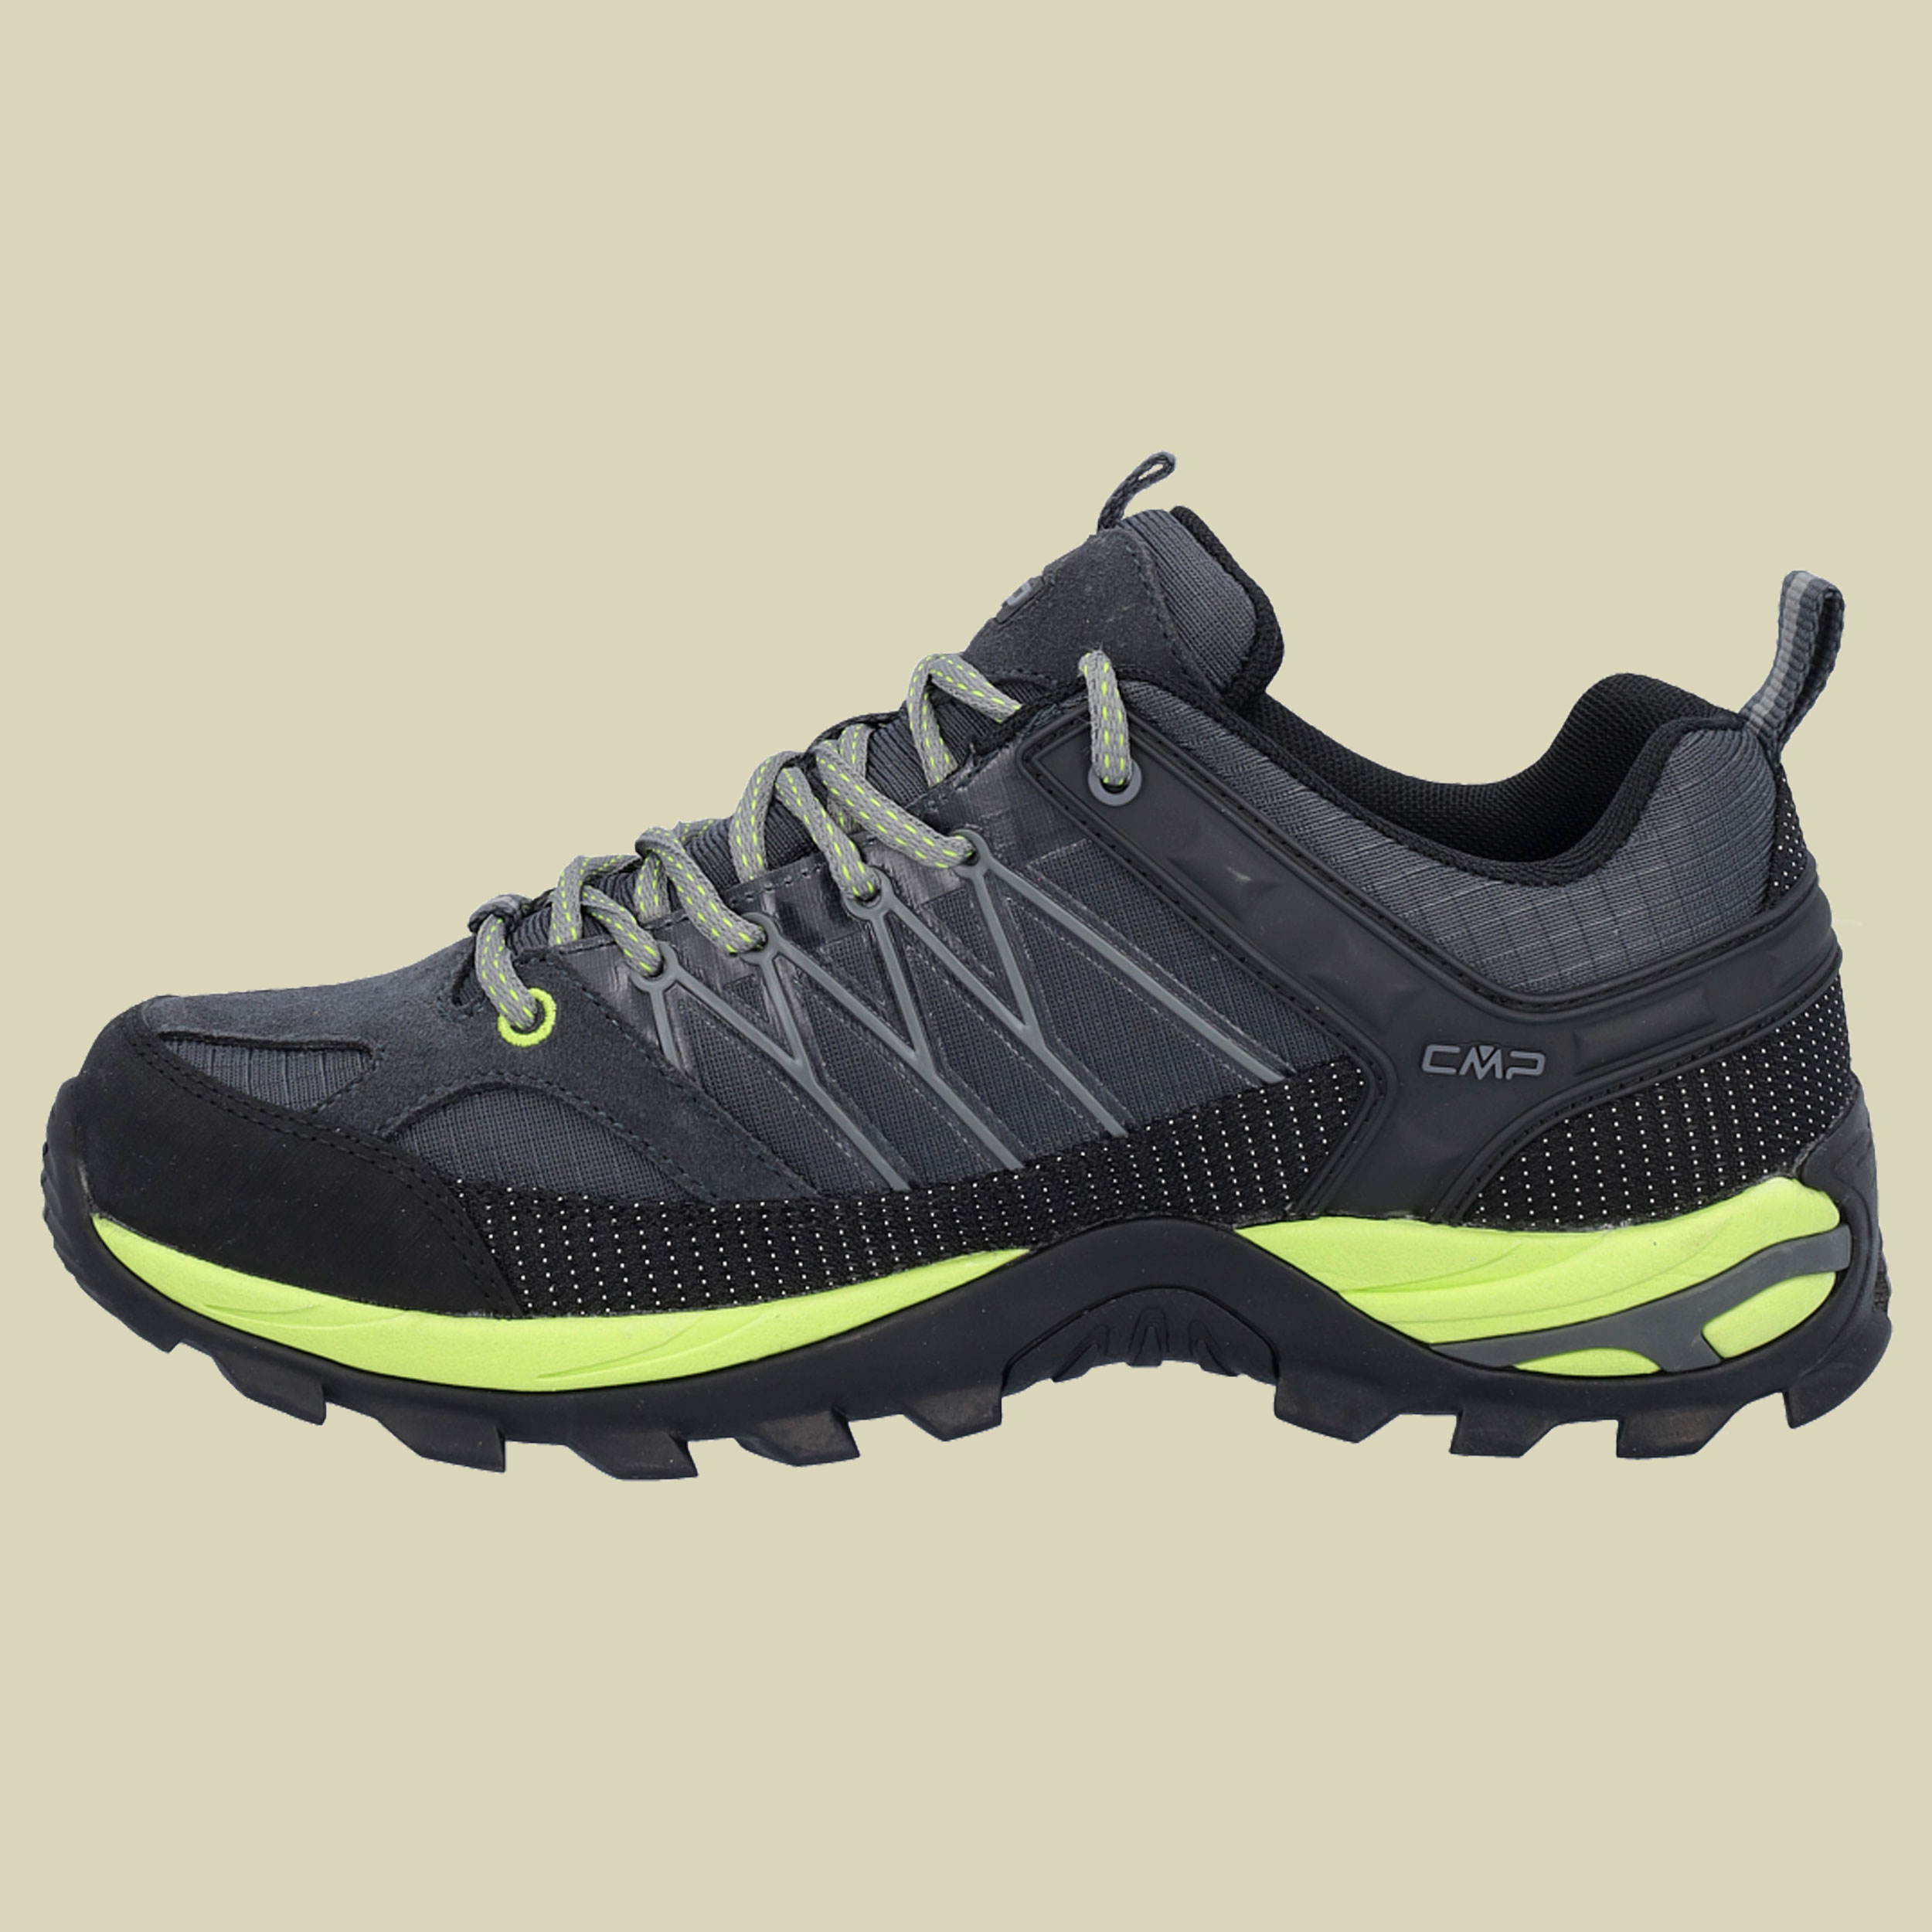 Rigel Low Trekking Shoe WP Men Größe 41 Farbe 72UN anthracite-limegreen